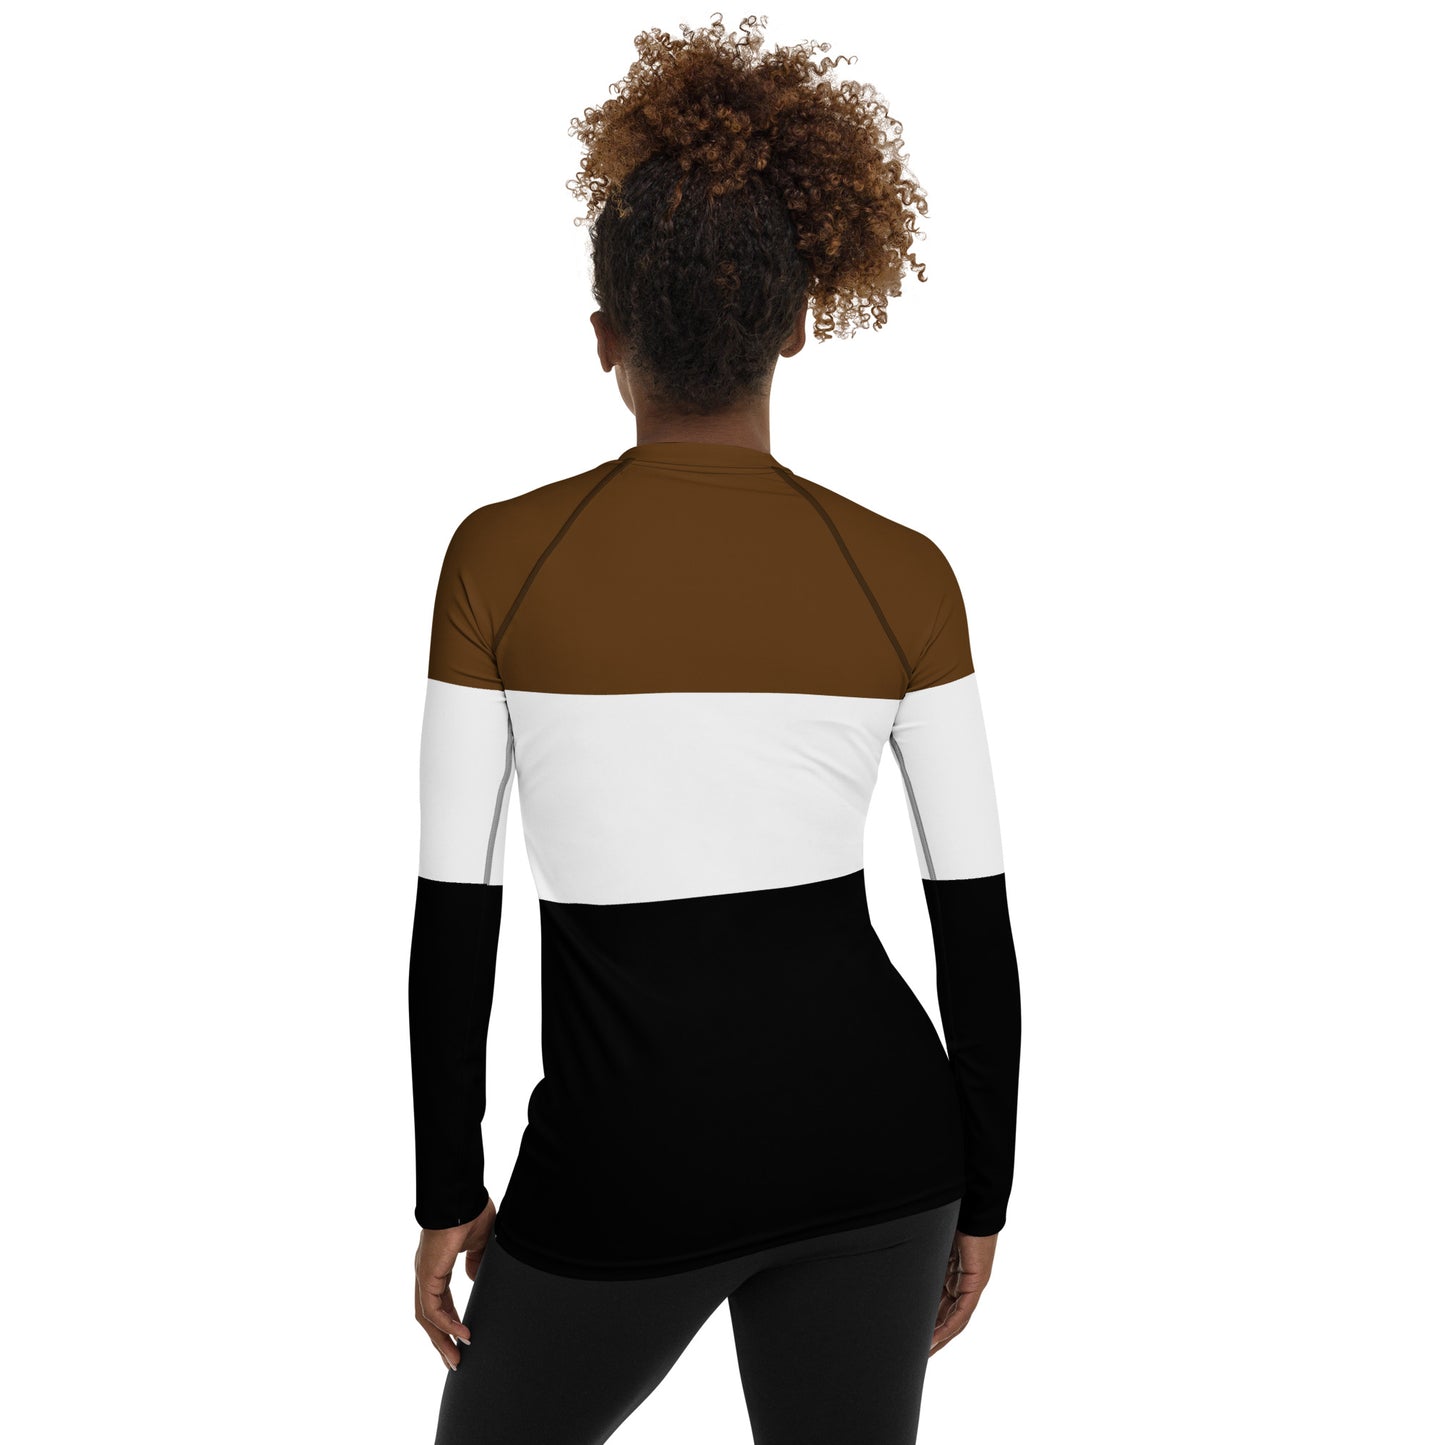 Brown, White, and Black Colorblock Rash Guard Long Sleeve Shirt